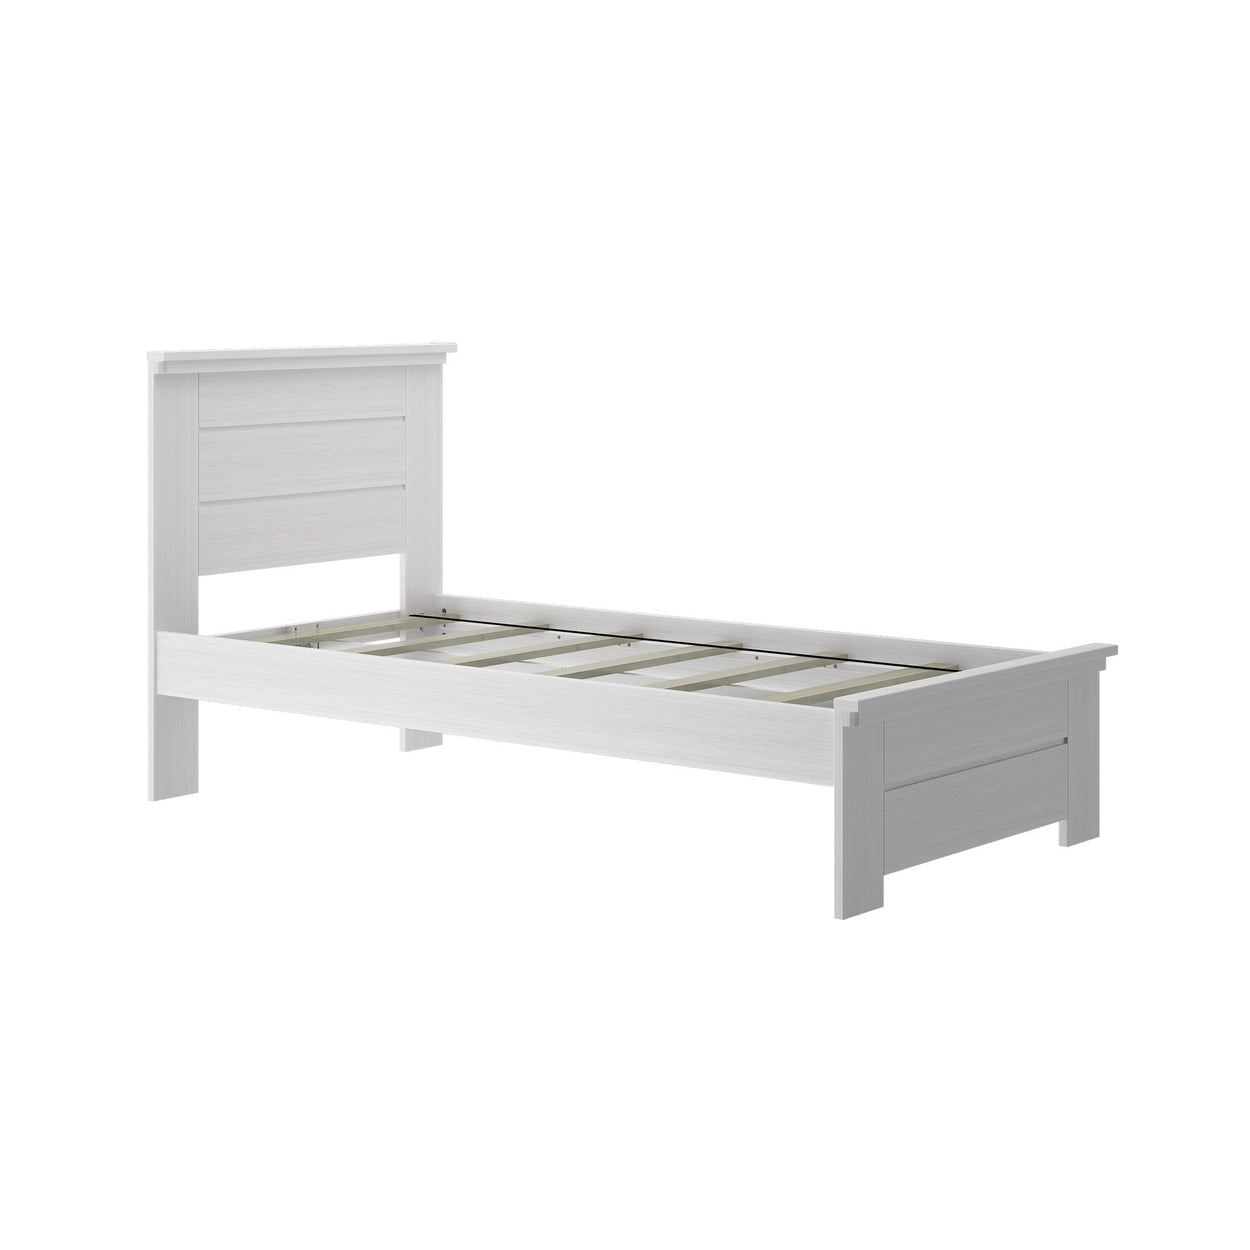 190220-182 : Kids Beds K/D Twin Bed Panel Headboard 7 slats w/ metal support bar, White Wash